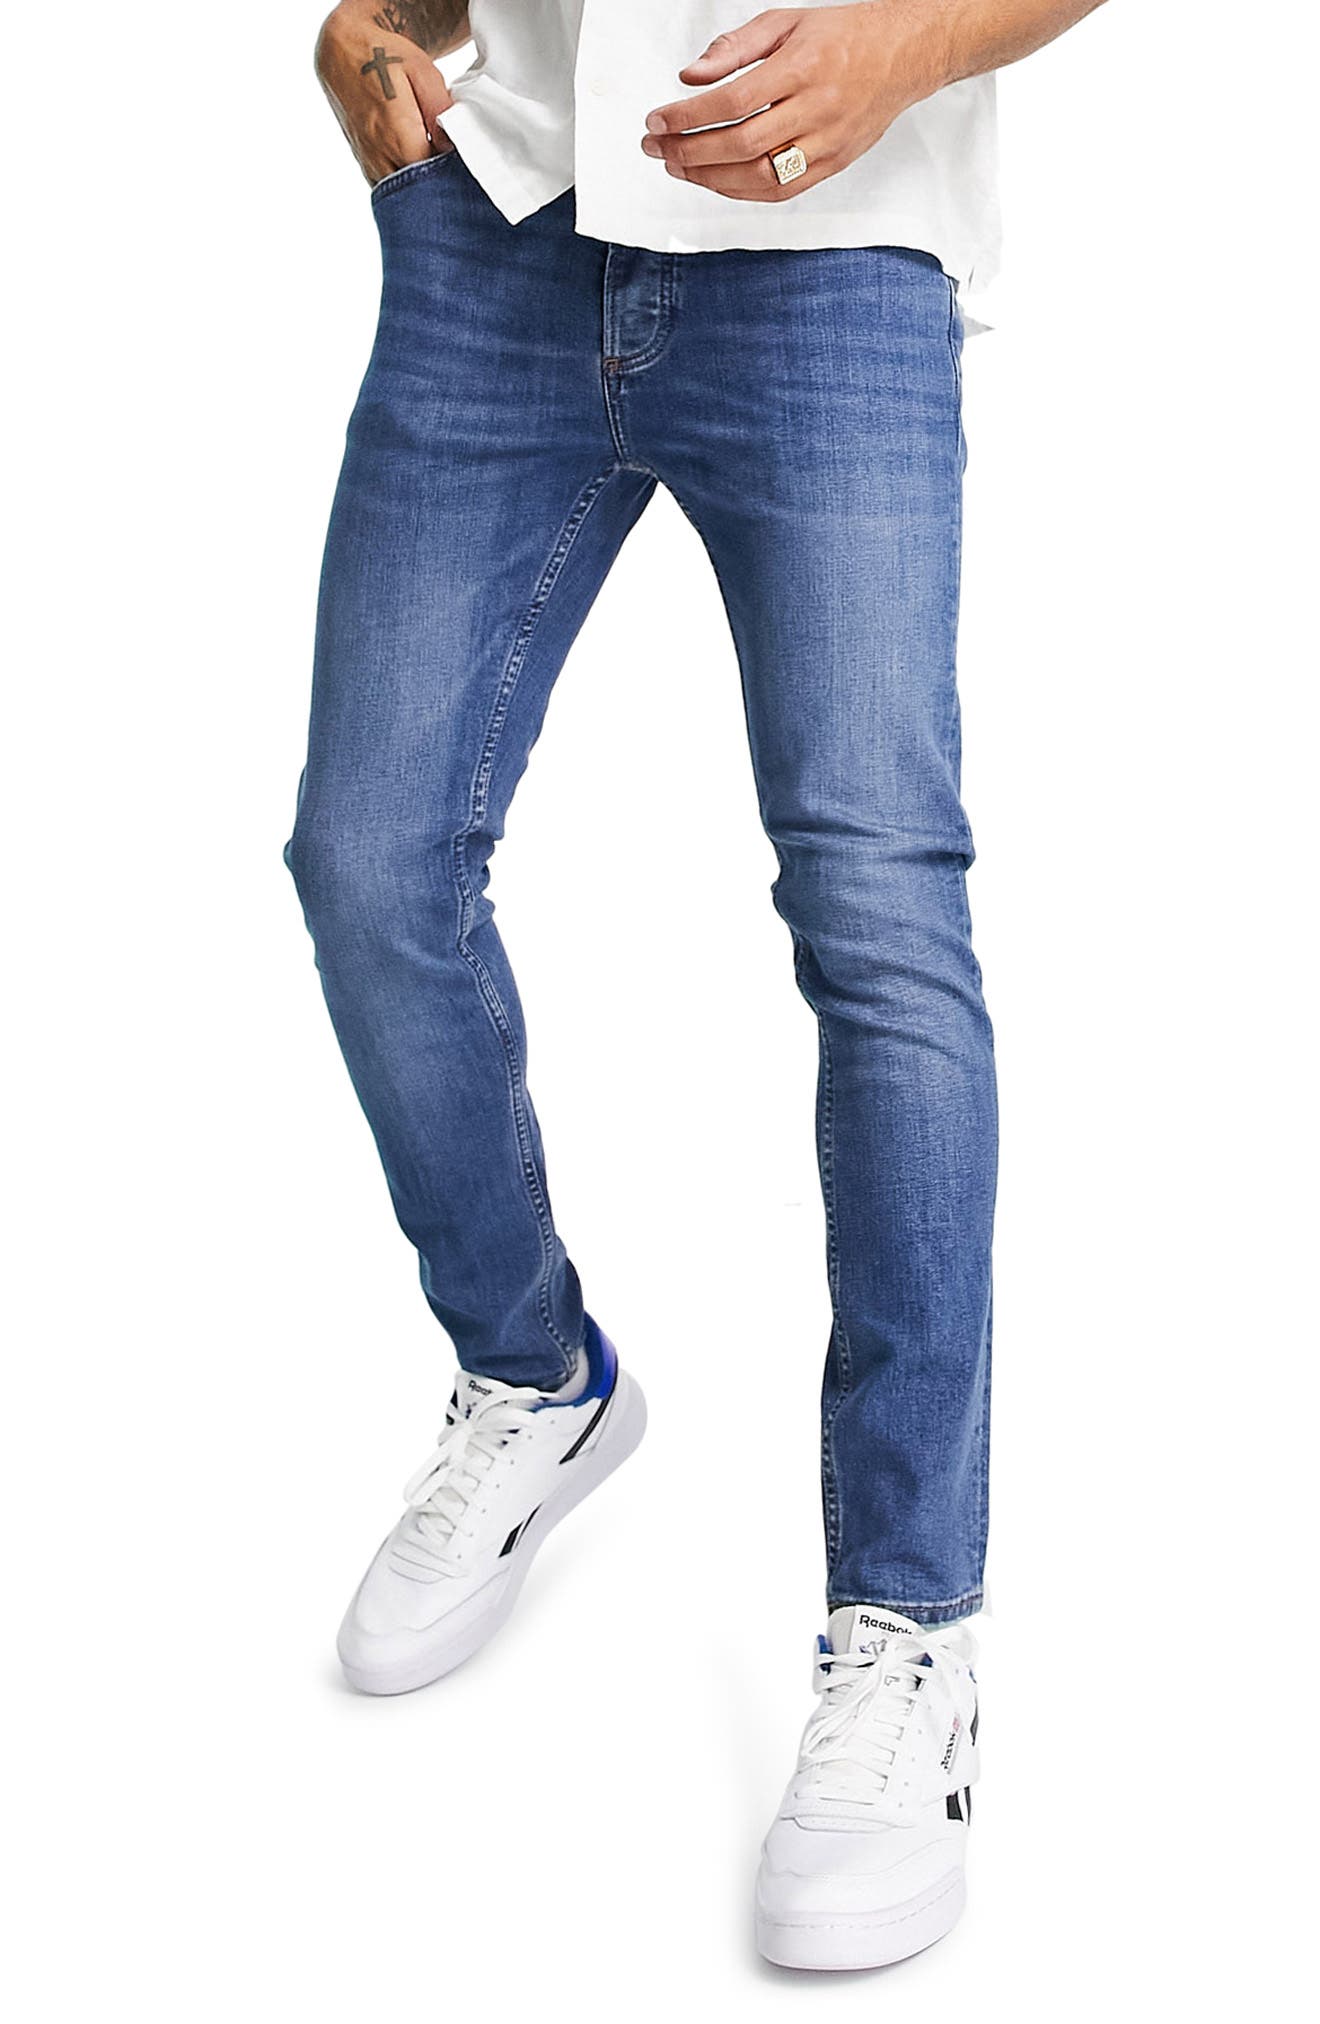 Jack & Jones Boys Skinny Blue Denim Jeans Strechable Smart Casual Pants Trouser